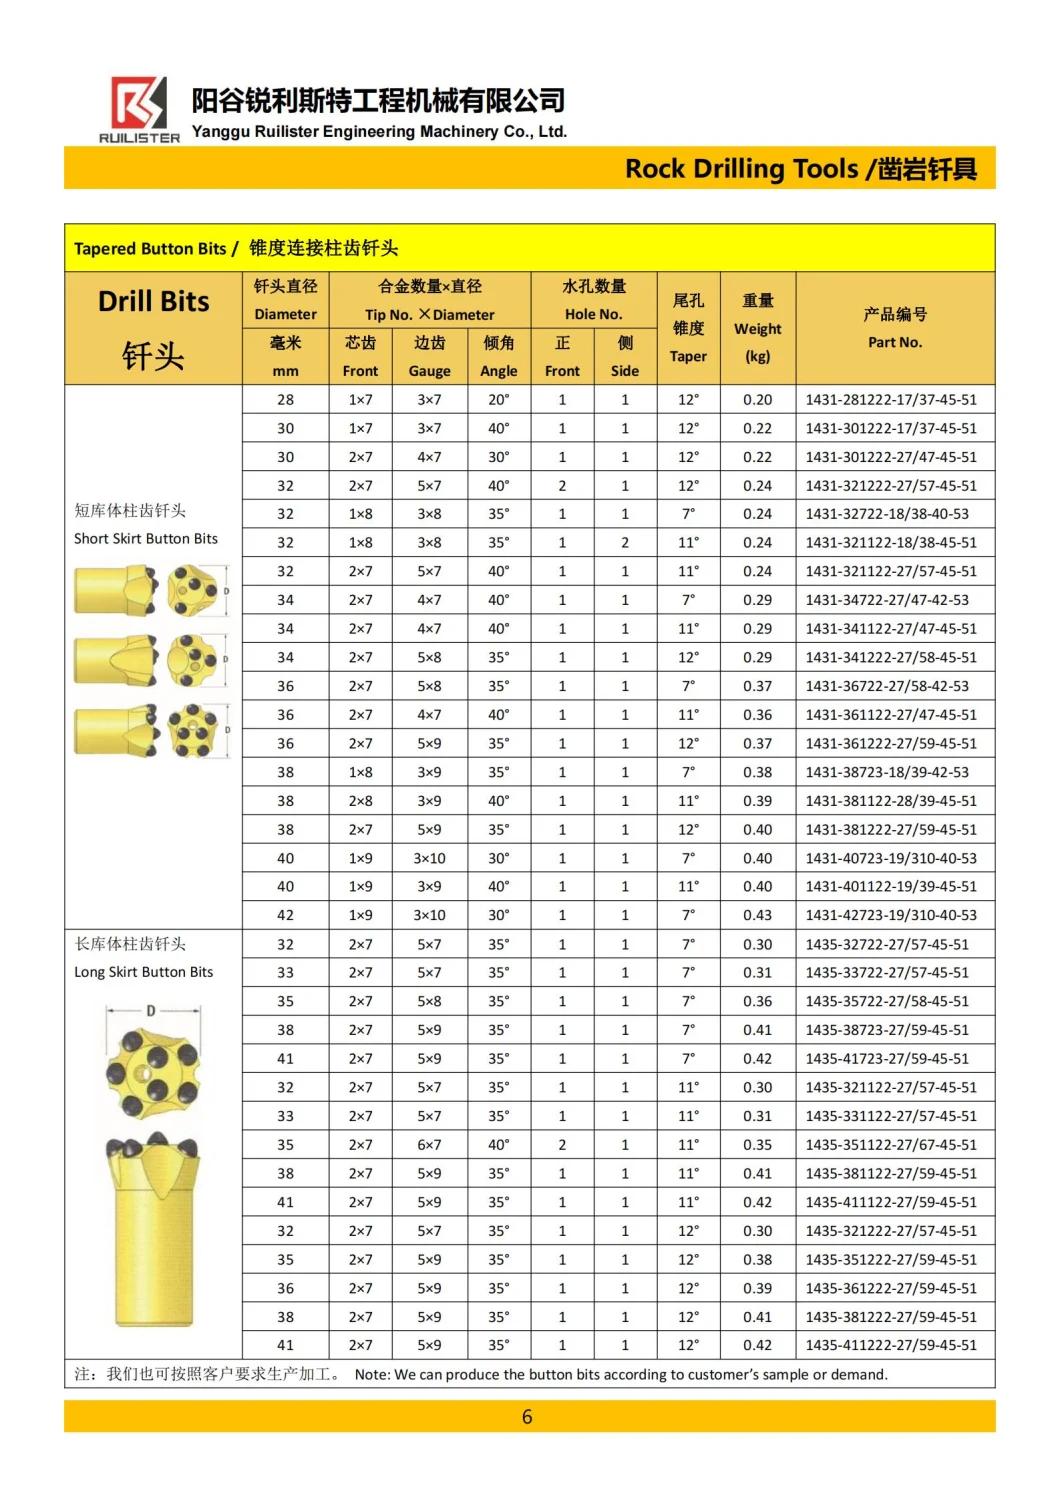 36mm 7 Button Rock Drilling Bit Fujian Tapered Button Bit